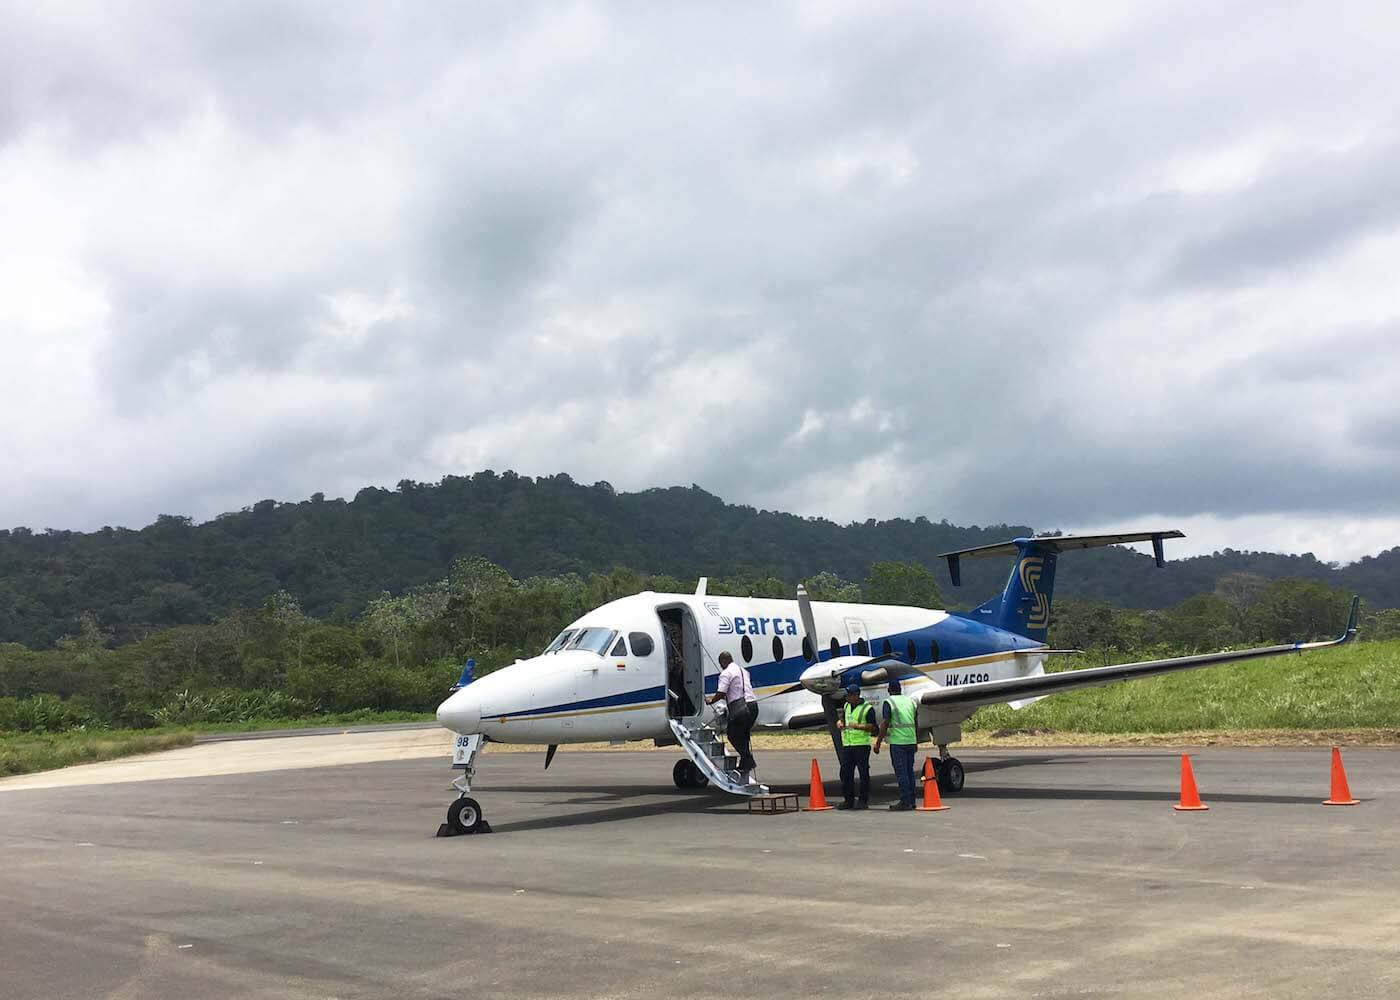 boarding a small plane at Bahia Solano's airport